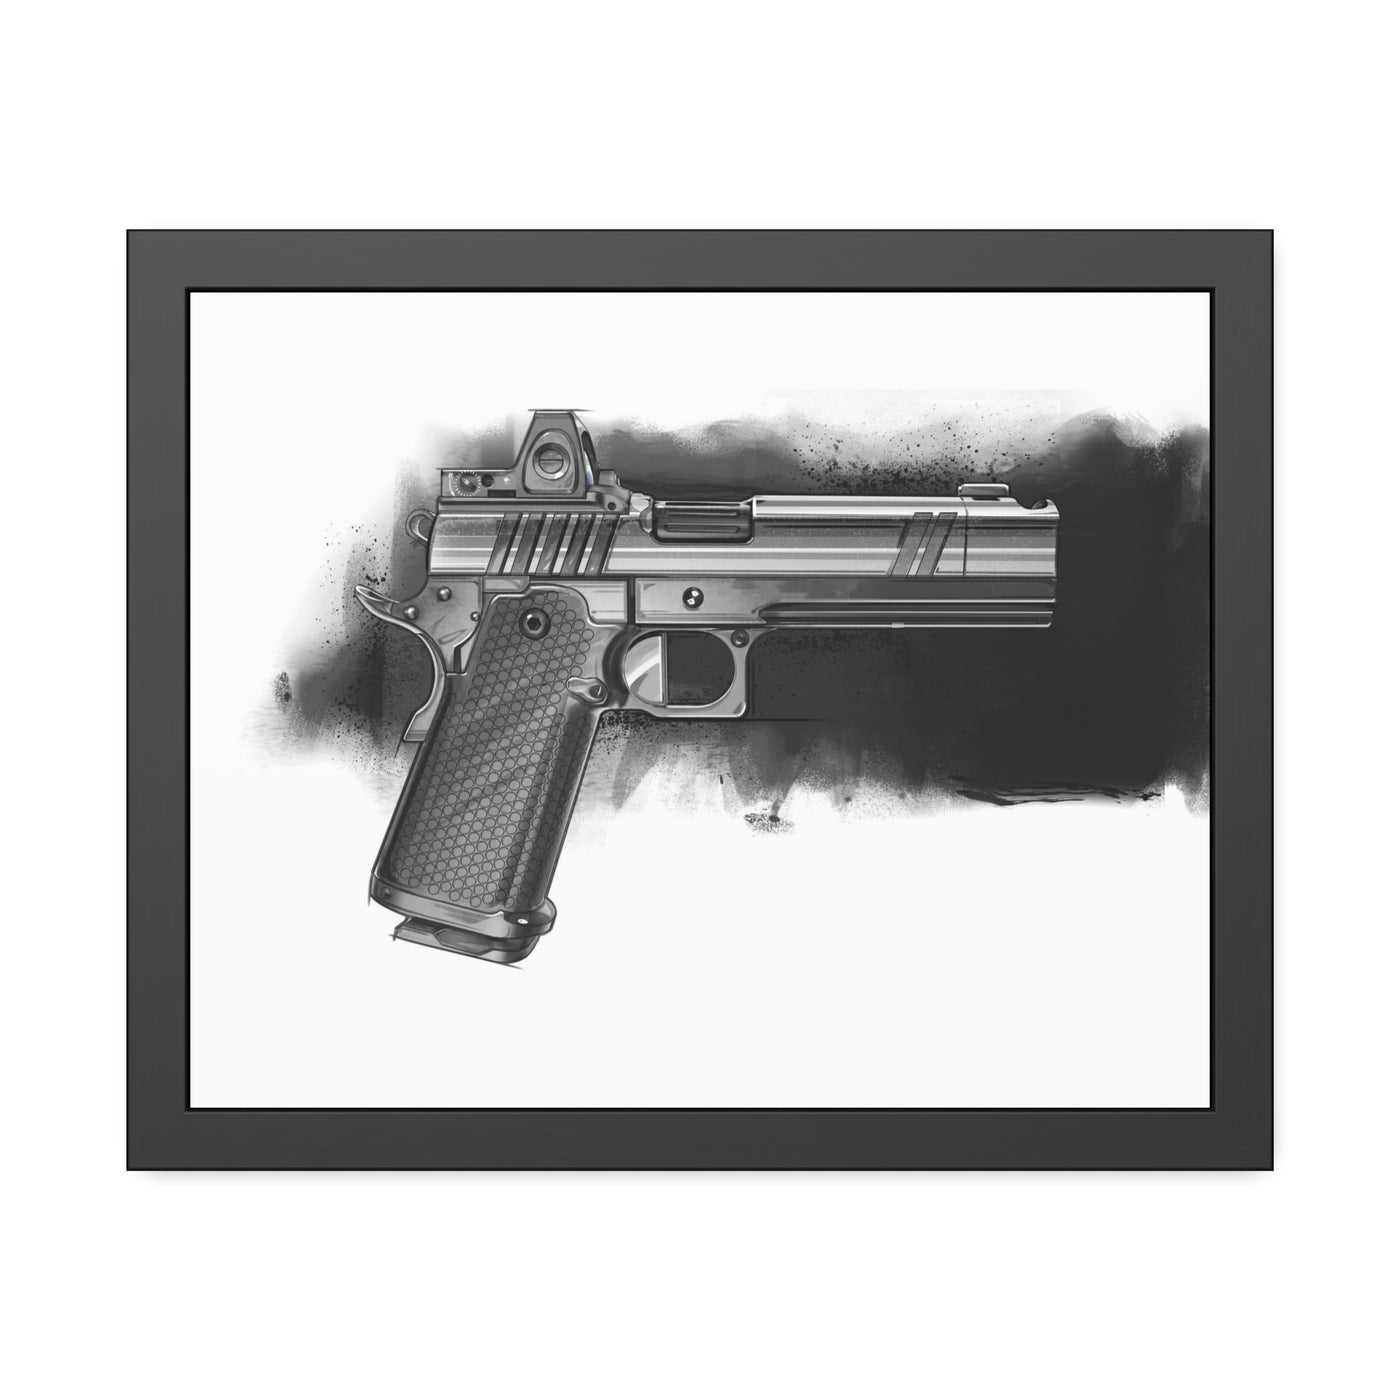 2011 Black & White Pistol Painting - Black Frame - Value Collection